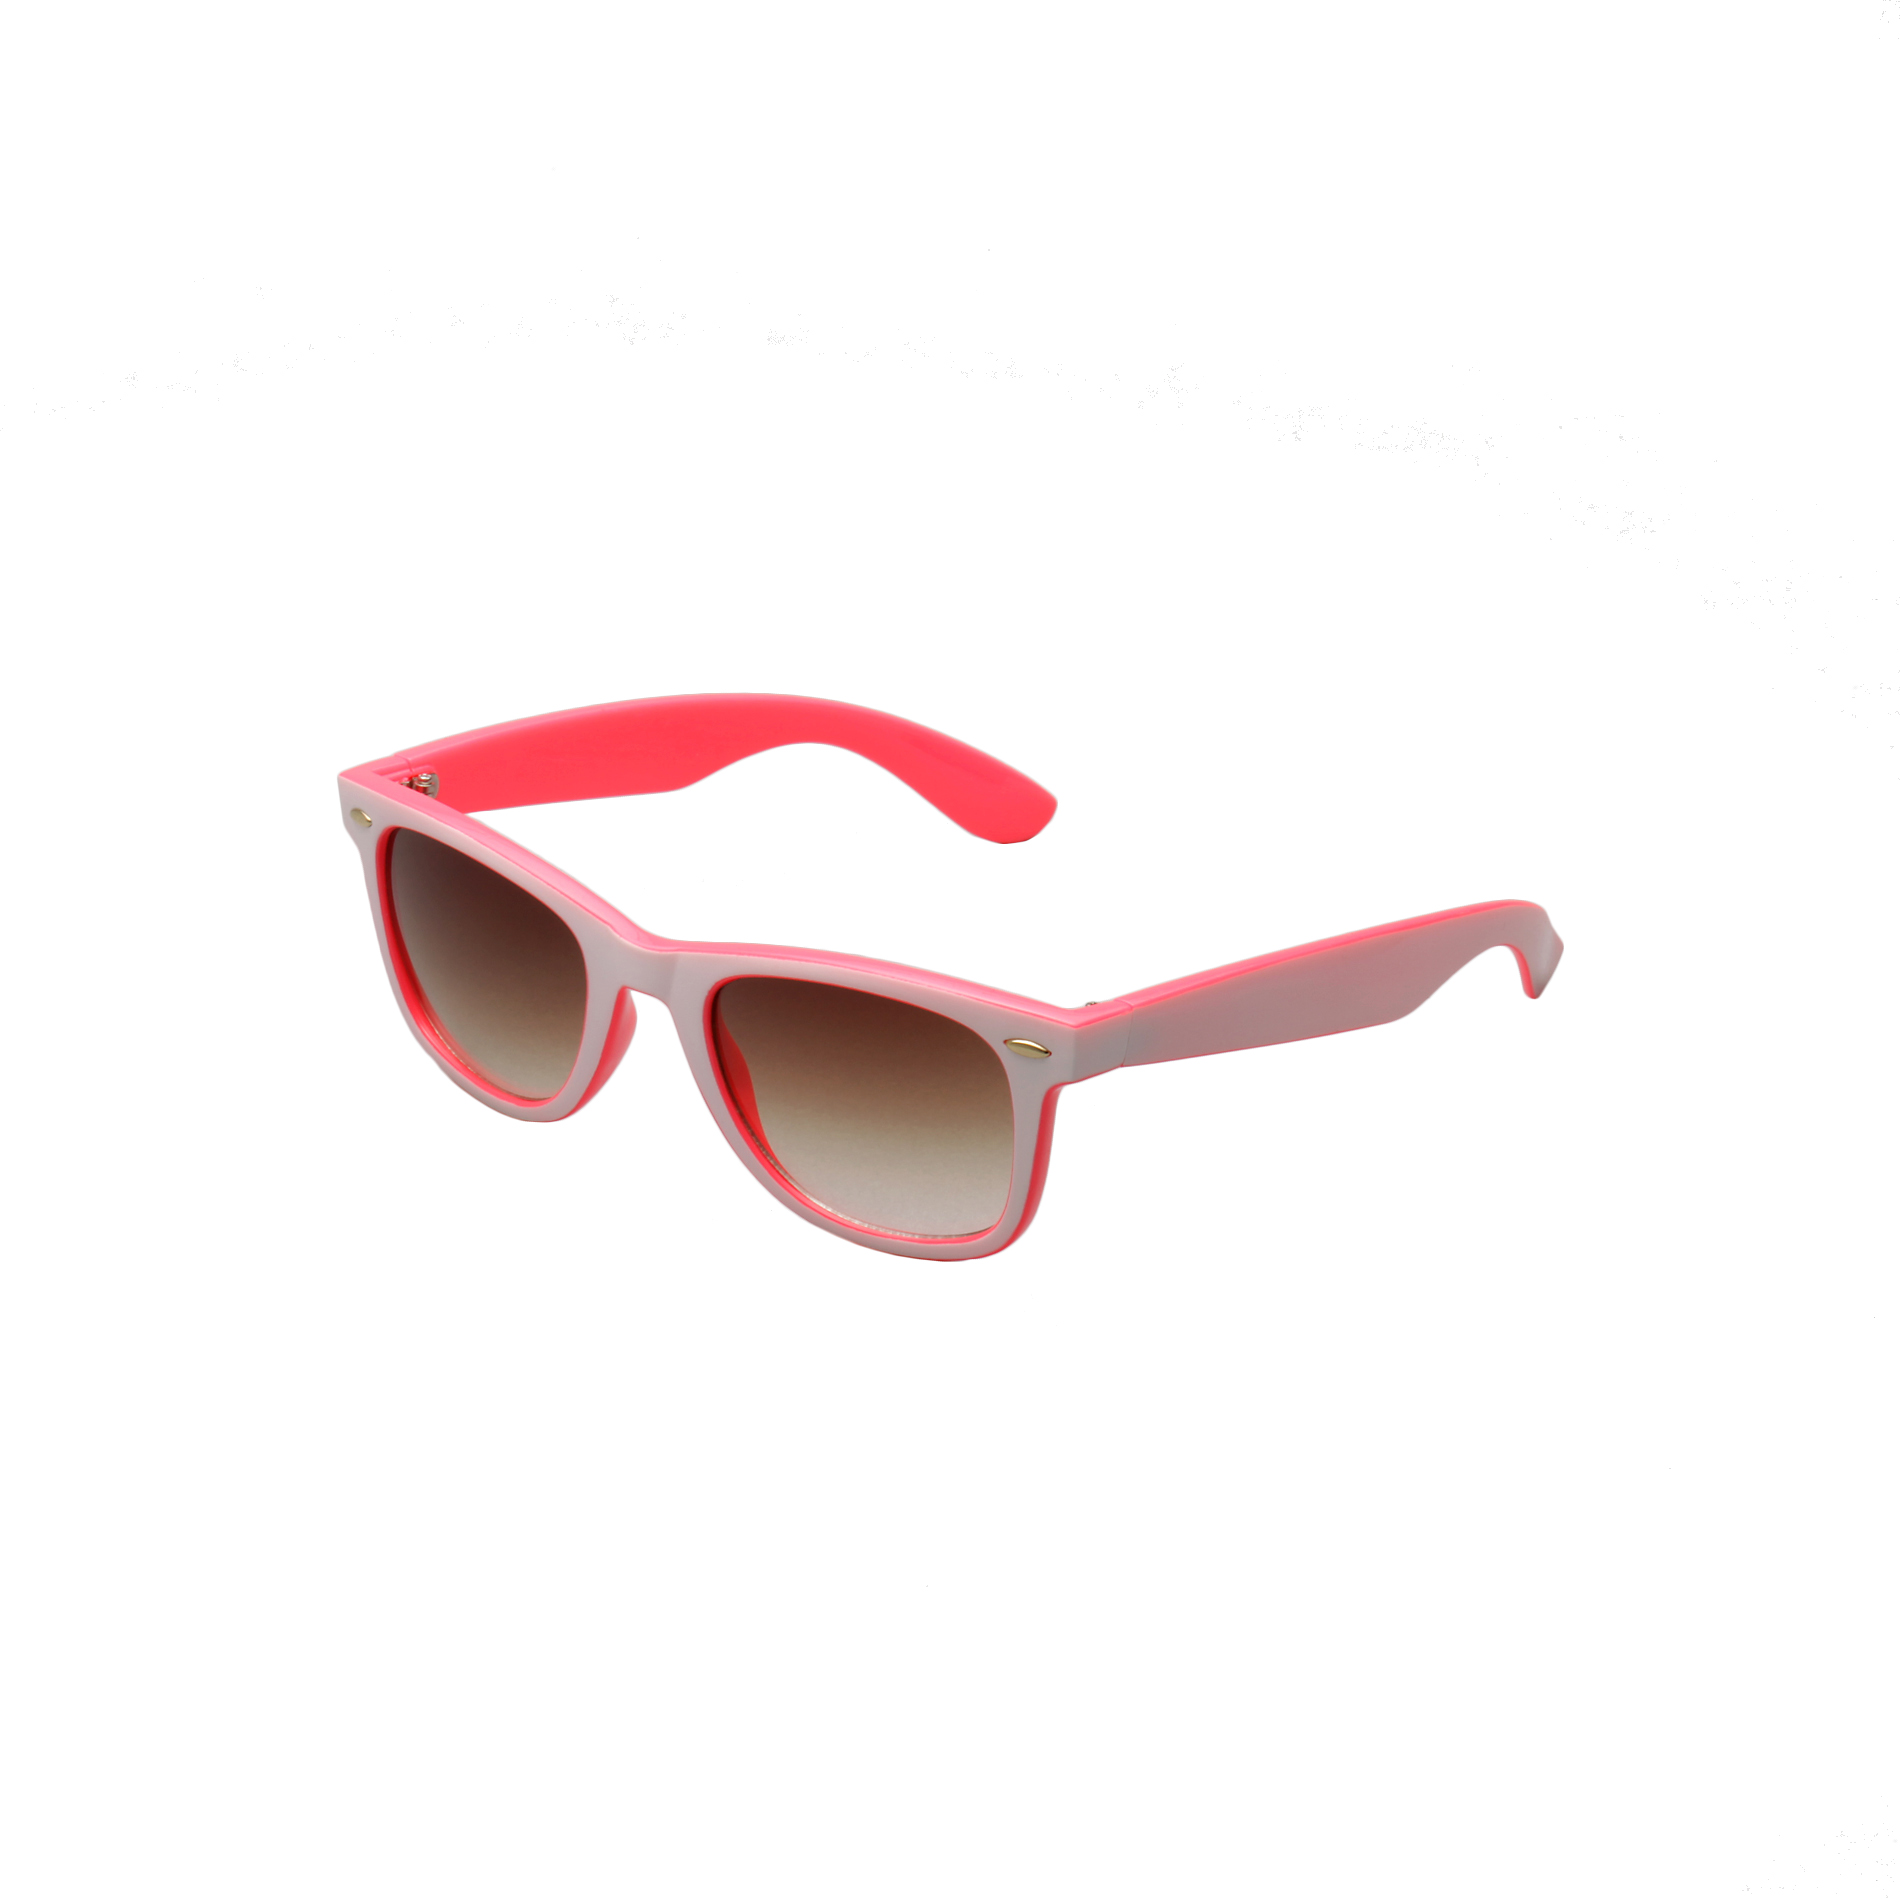 Joe Boxer Women's Studded Wayfarer Sunglasses